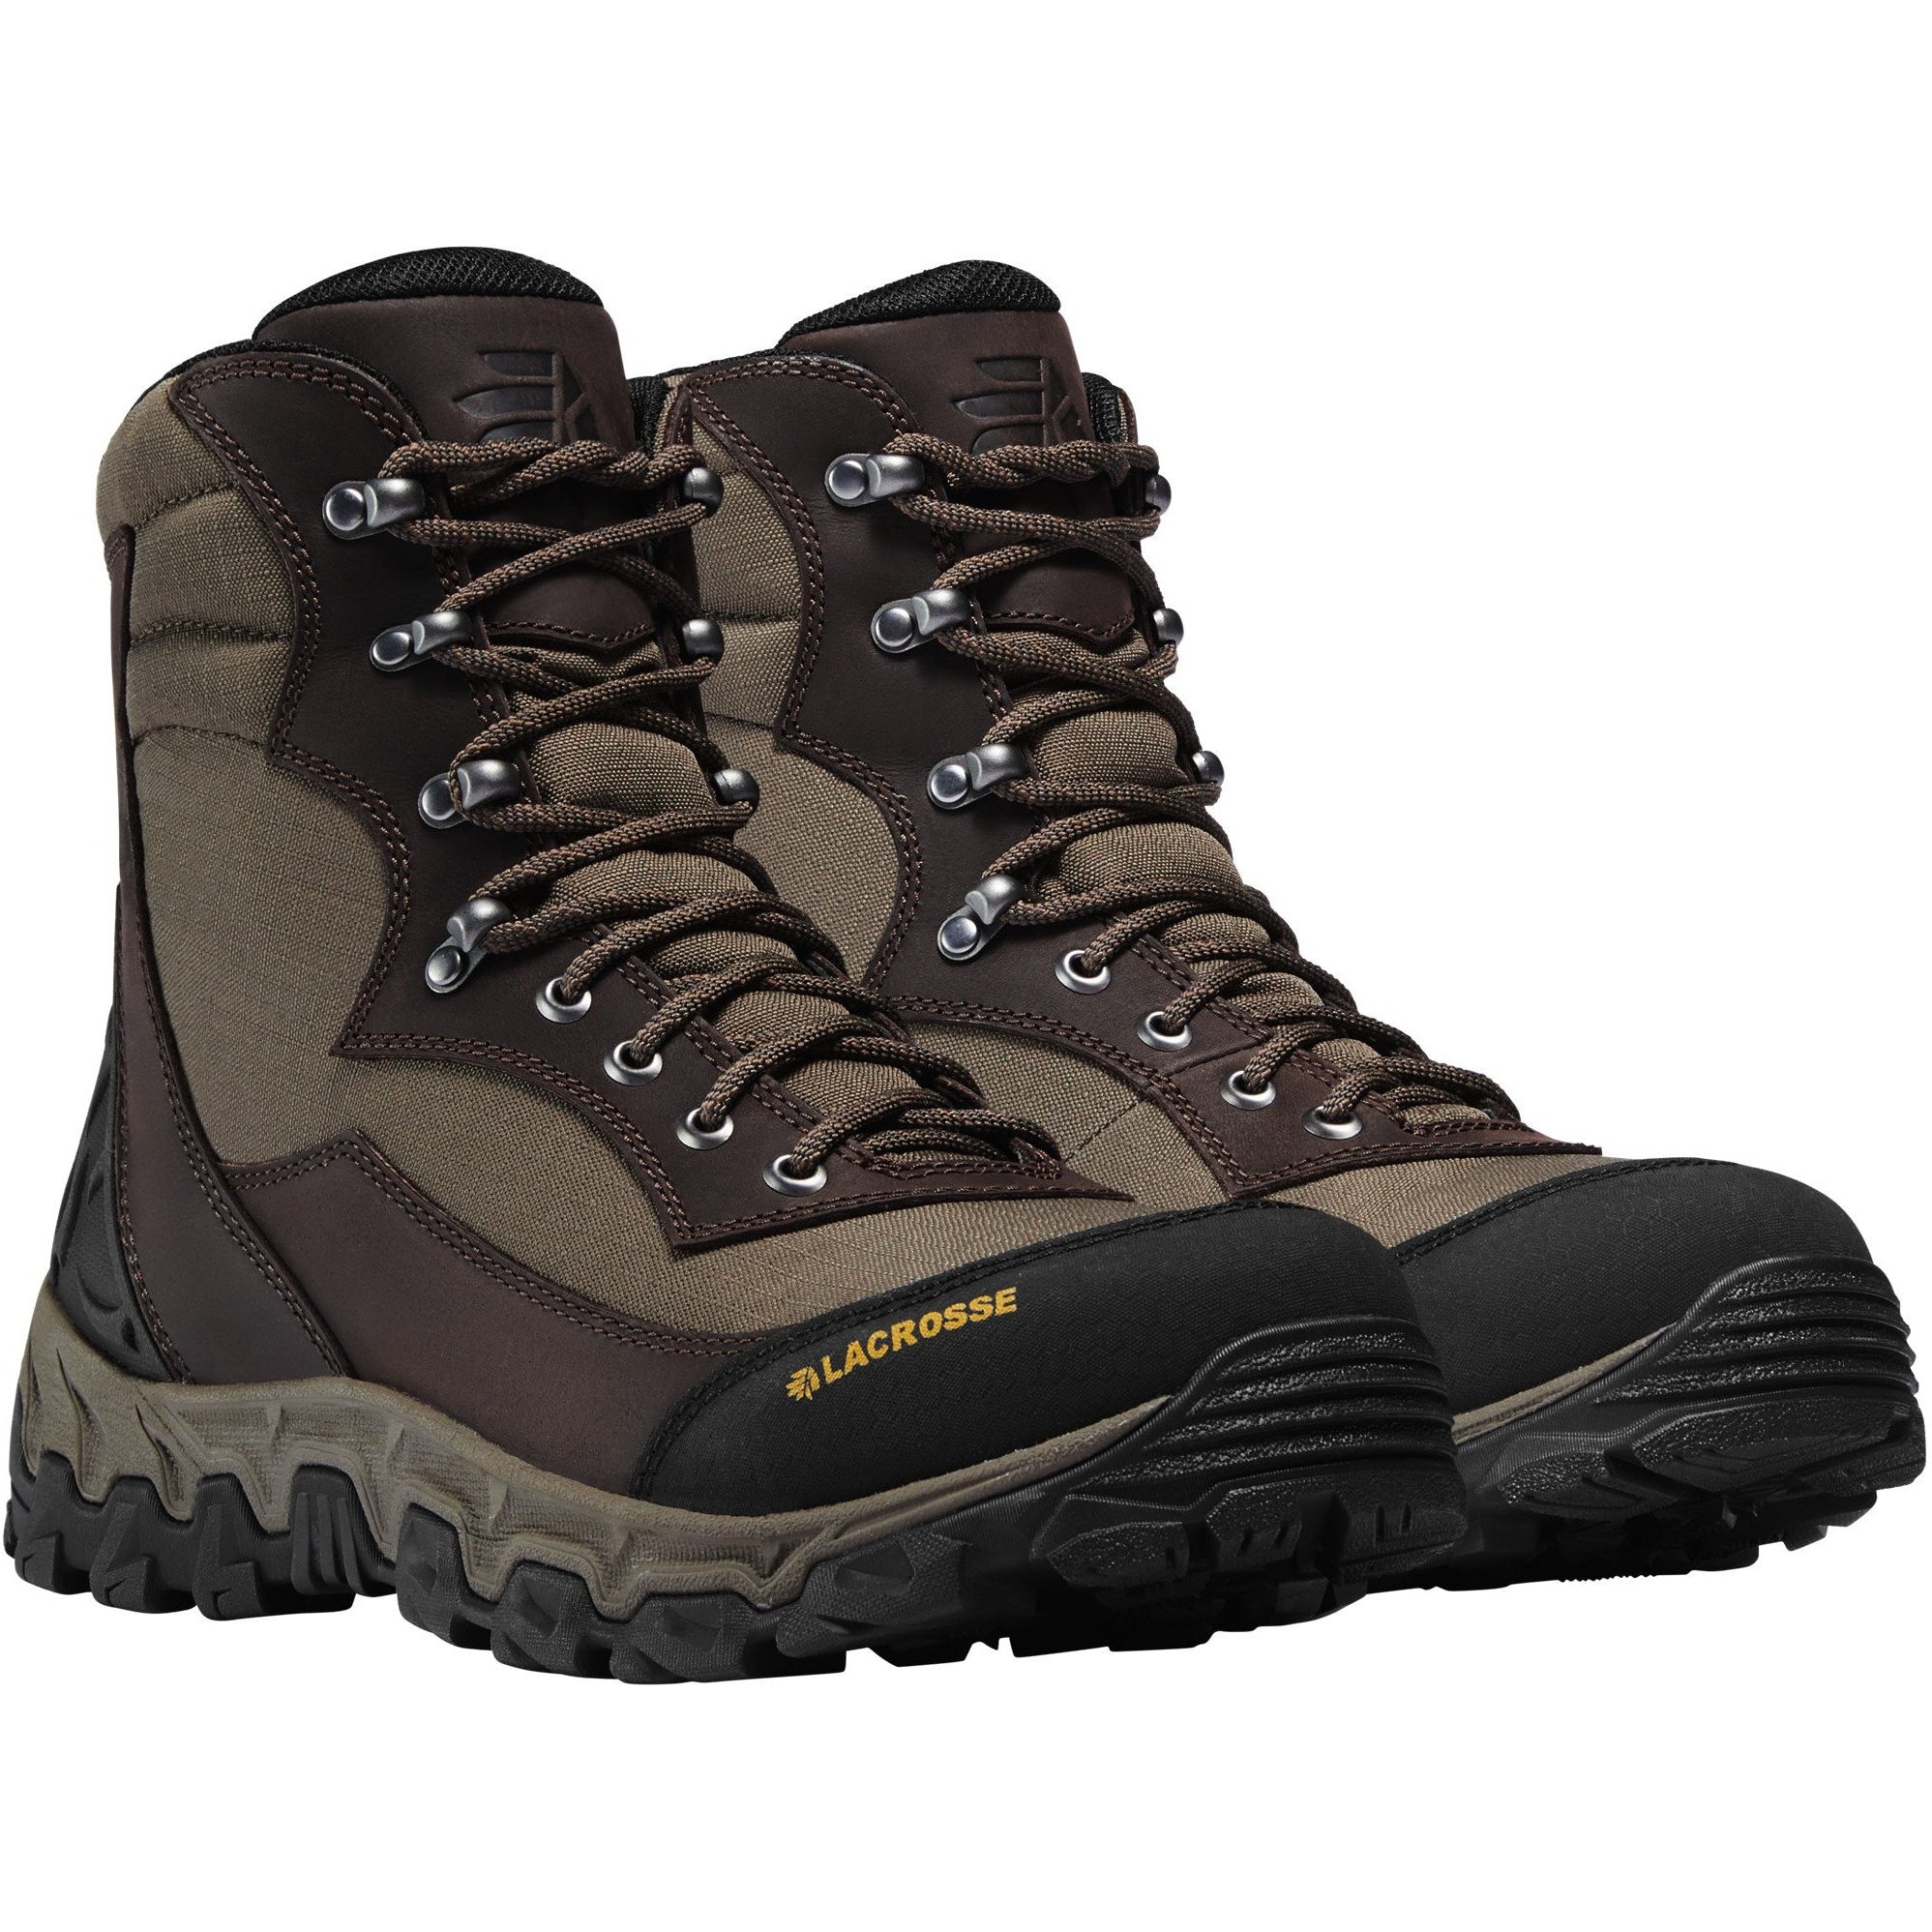 Lacrosse Men's Lodestar 7" Soft Toe Waterproof Hunt Boot - Brown - 516330 7 / Medium / Brown - Overlook Boots